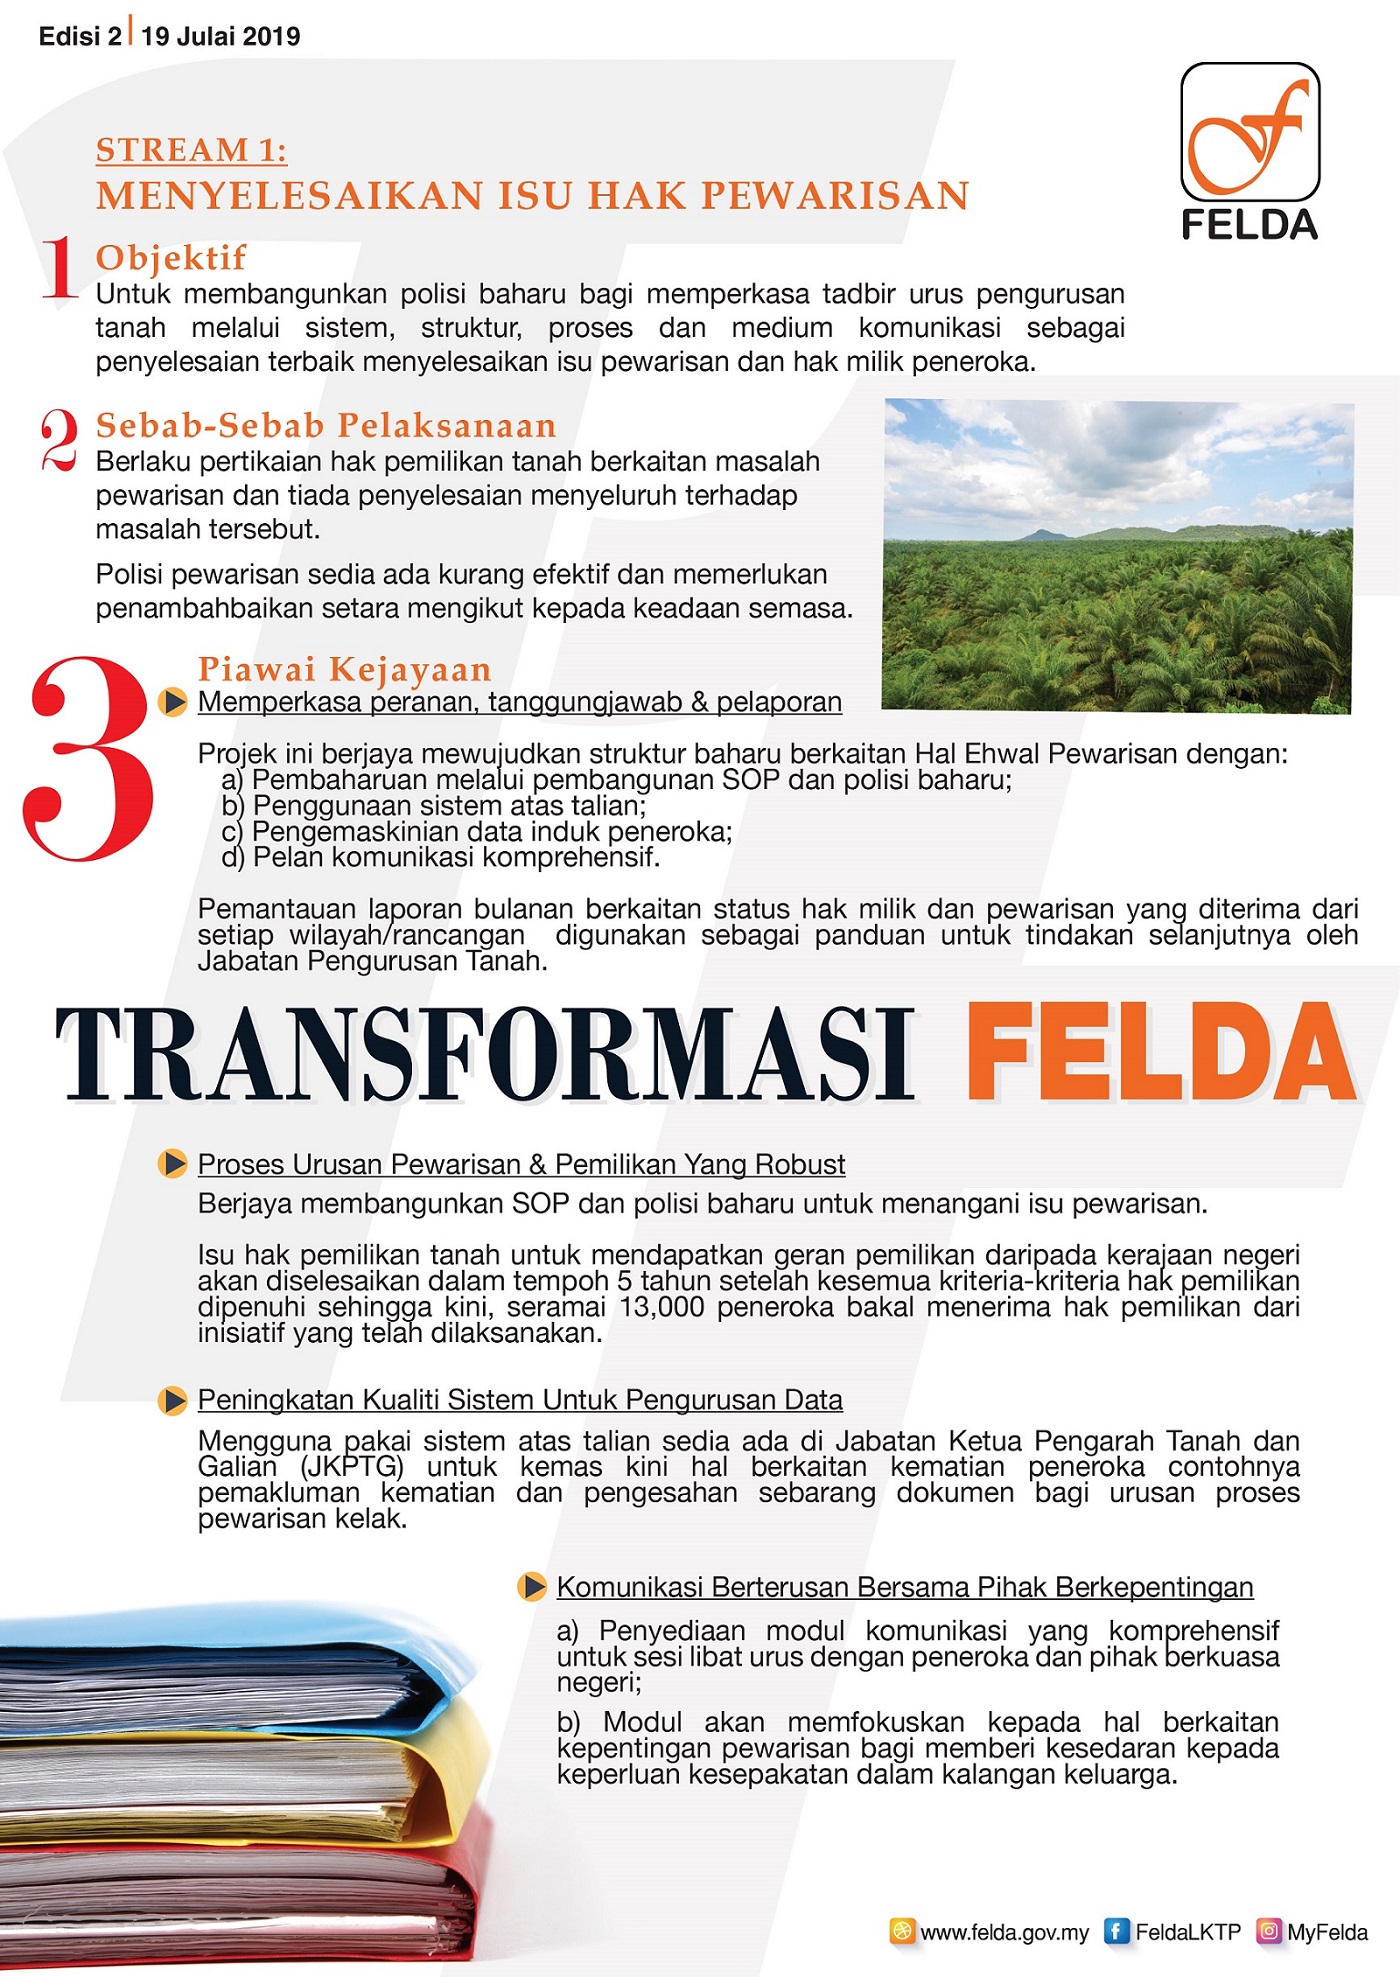 TF02 Transformasi FELDA Hak Pewarisanjpg